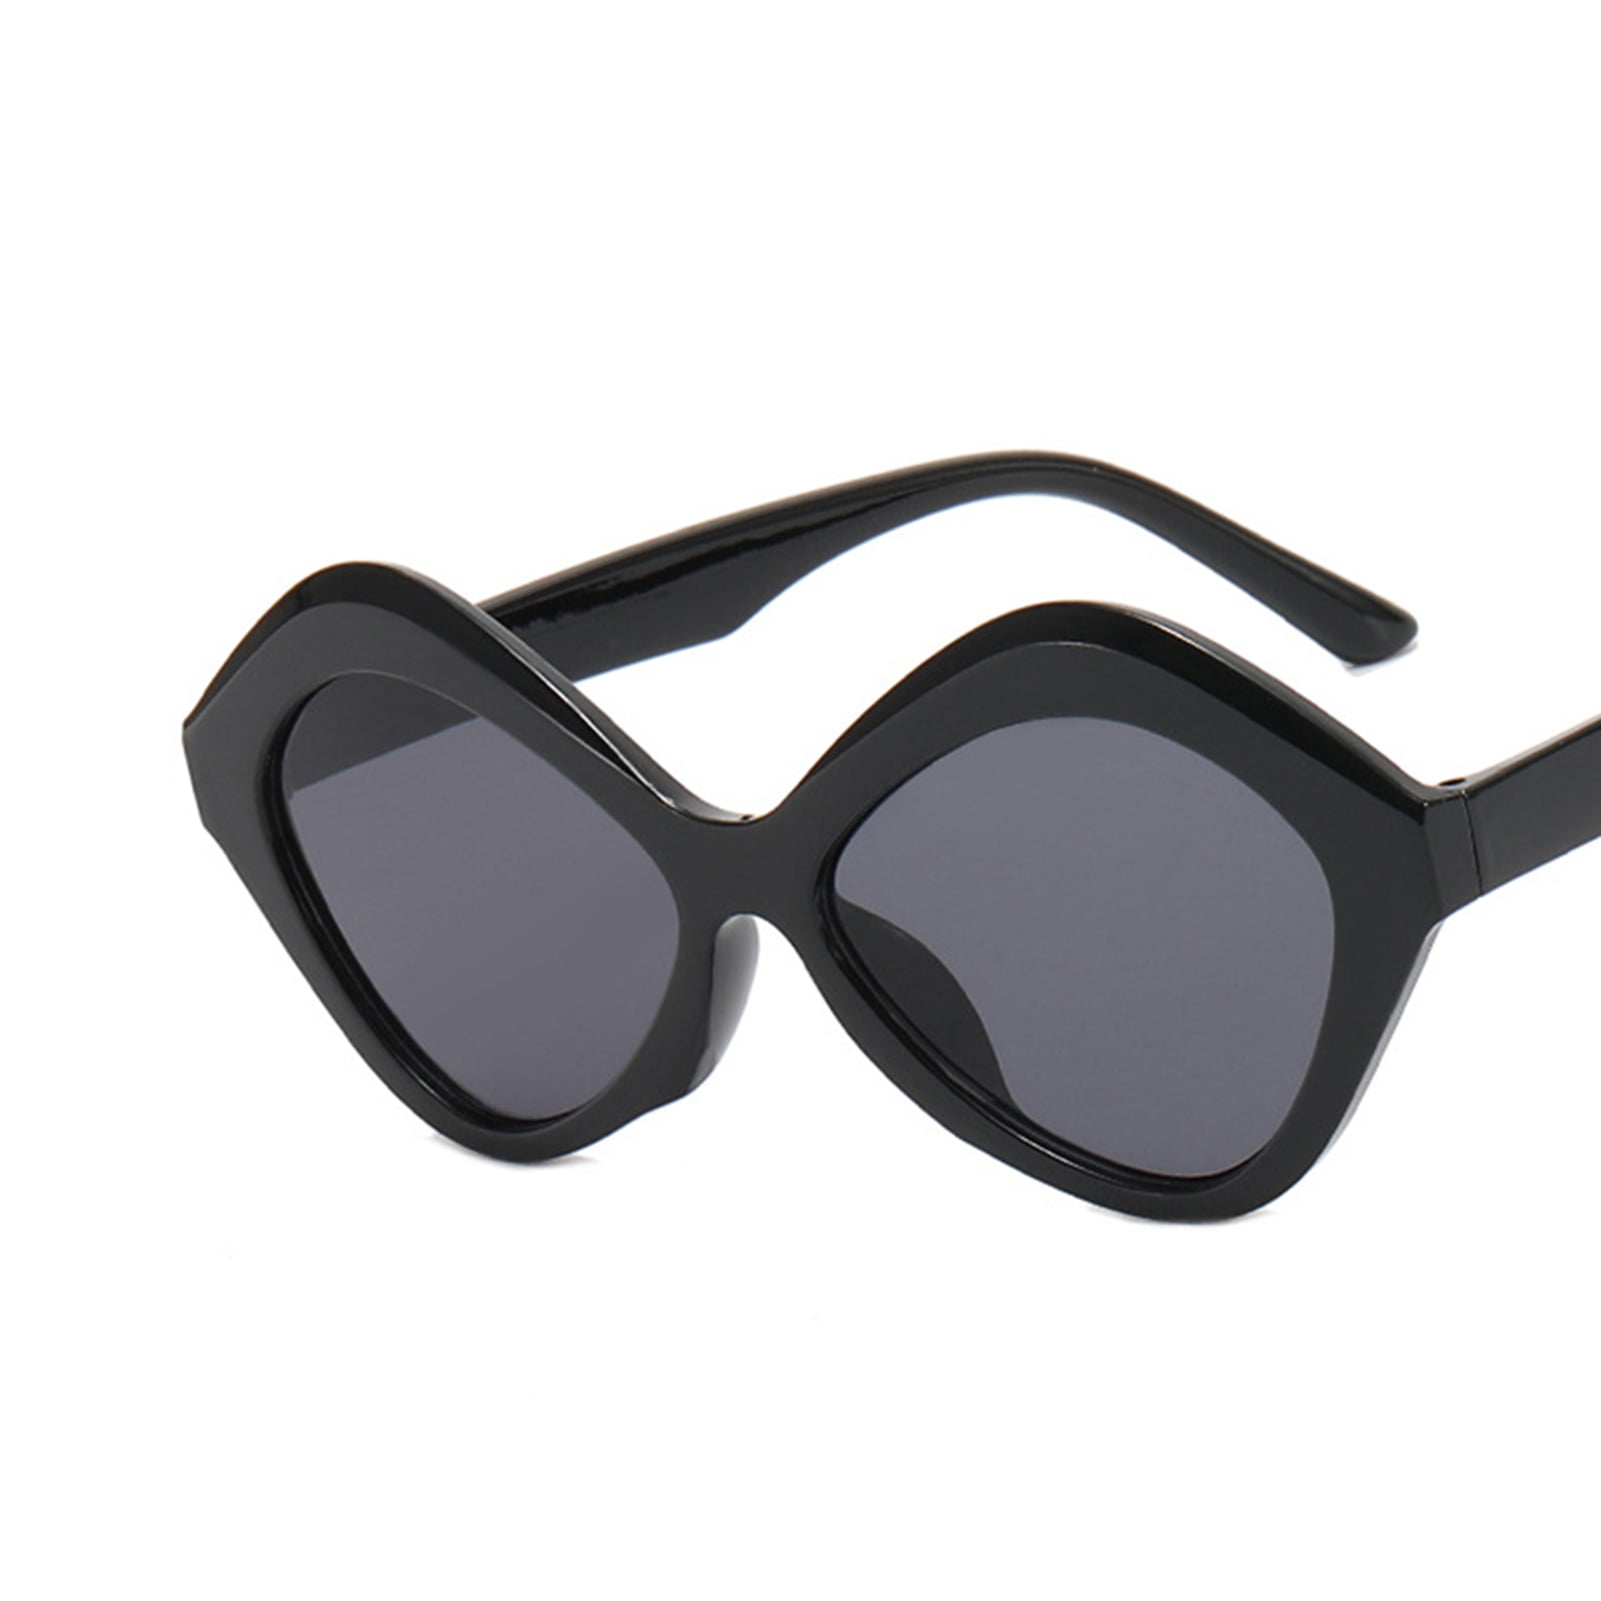 Joyfeel Buy Black Eye Glasses Sun Glasses Bag Glasses Portable Glasses Case Carabiner Hook 